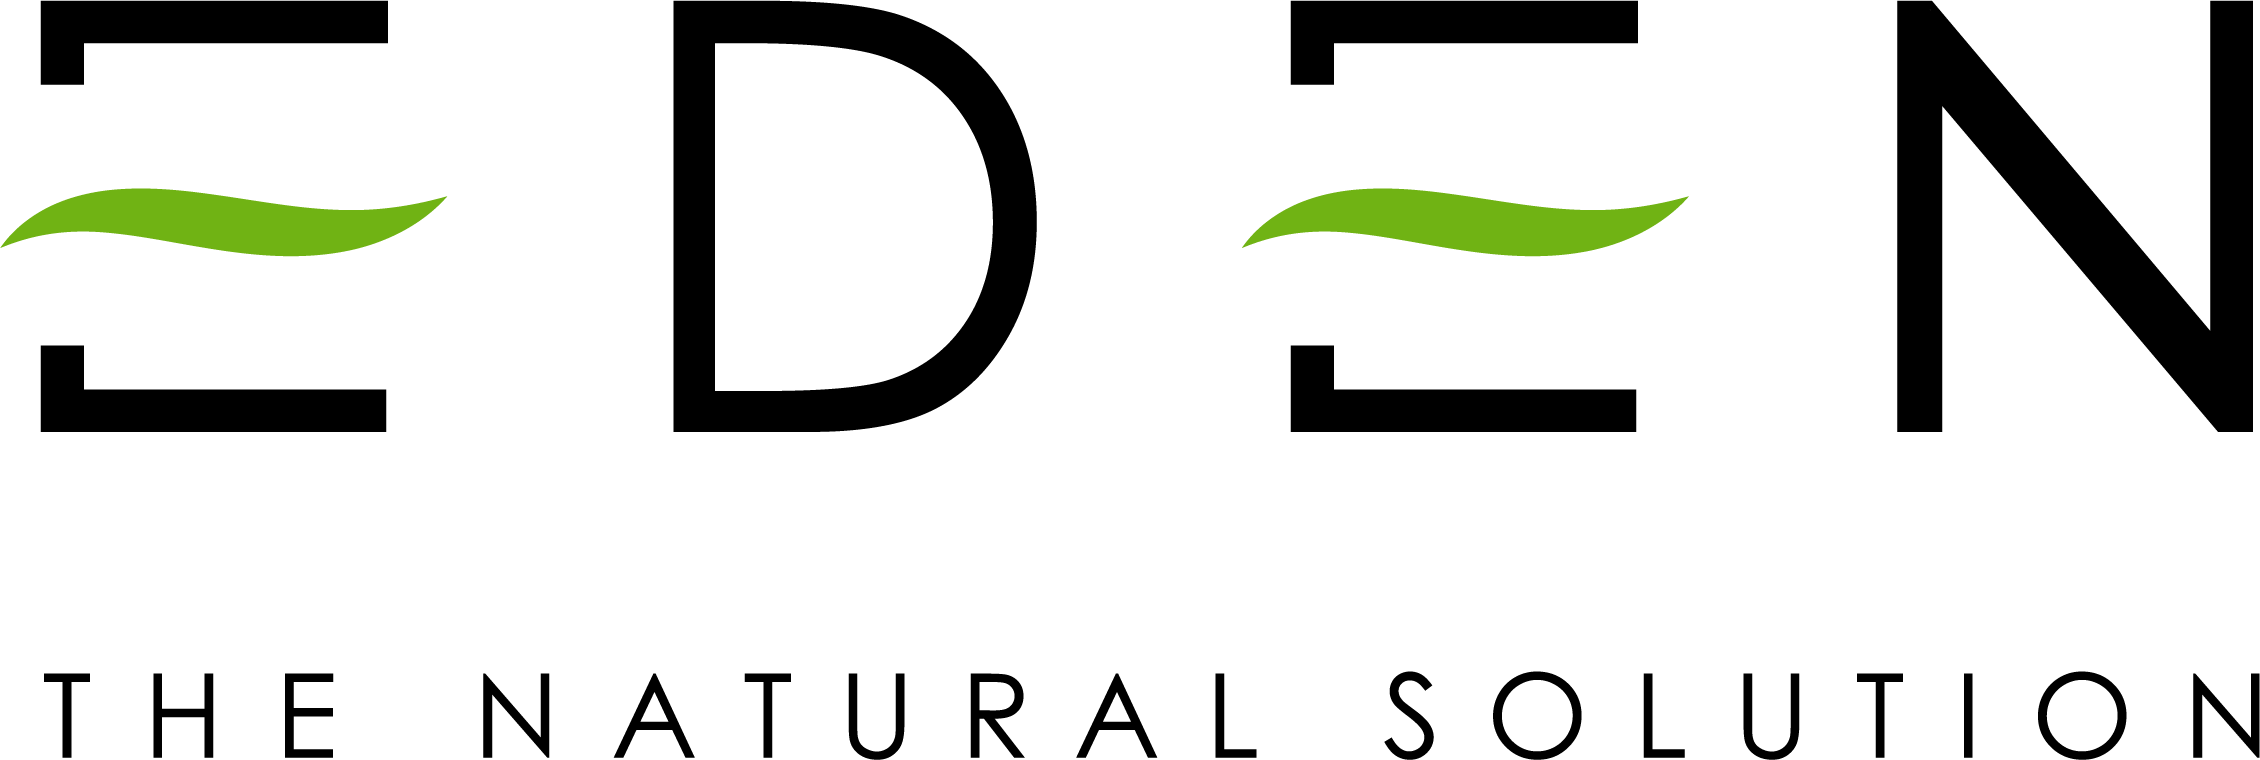 'Eden. The Natural Solution' logo.